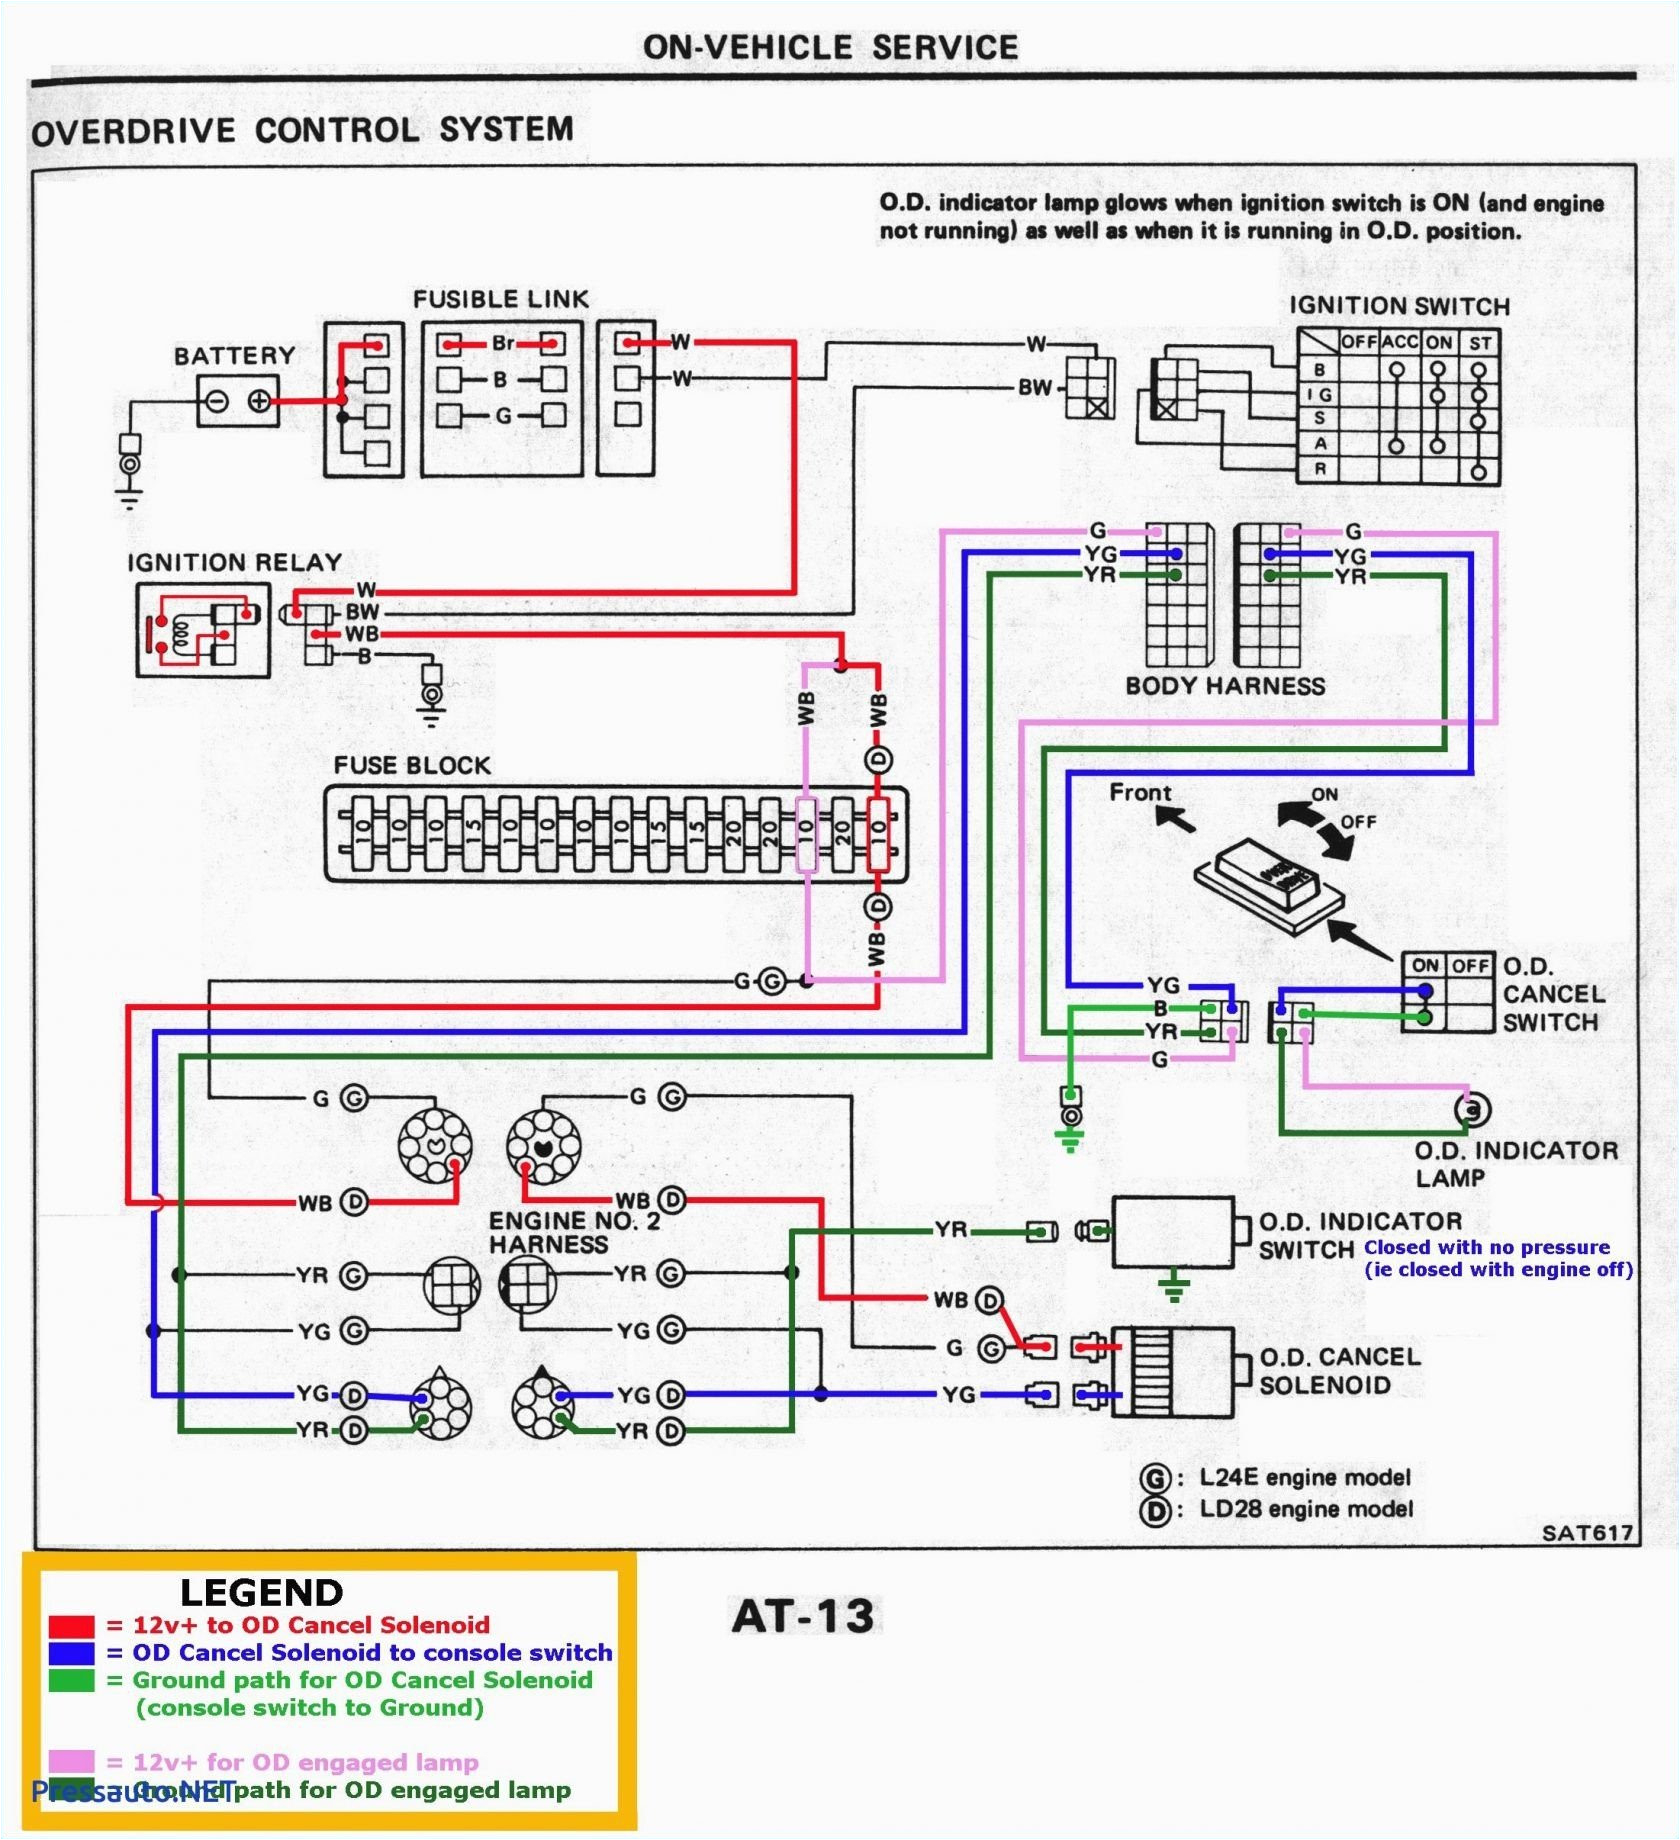 volvo penta wiring harness diagram lovely 5 7 mercruiser starter wiring diagram plete wiring diagrams e280a2 of volvo penta wiring harness diagram jpg